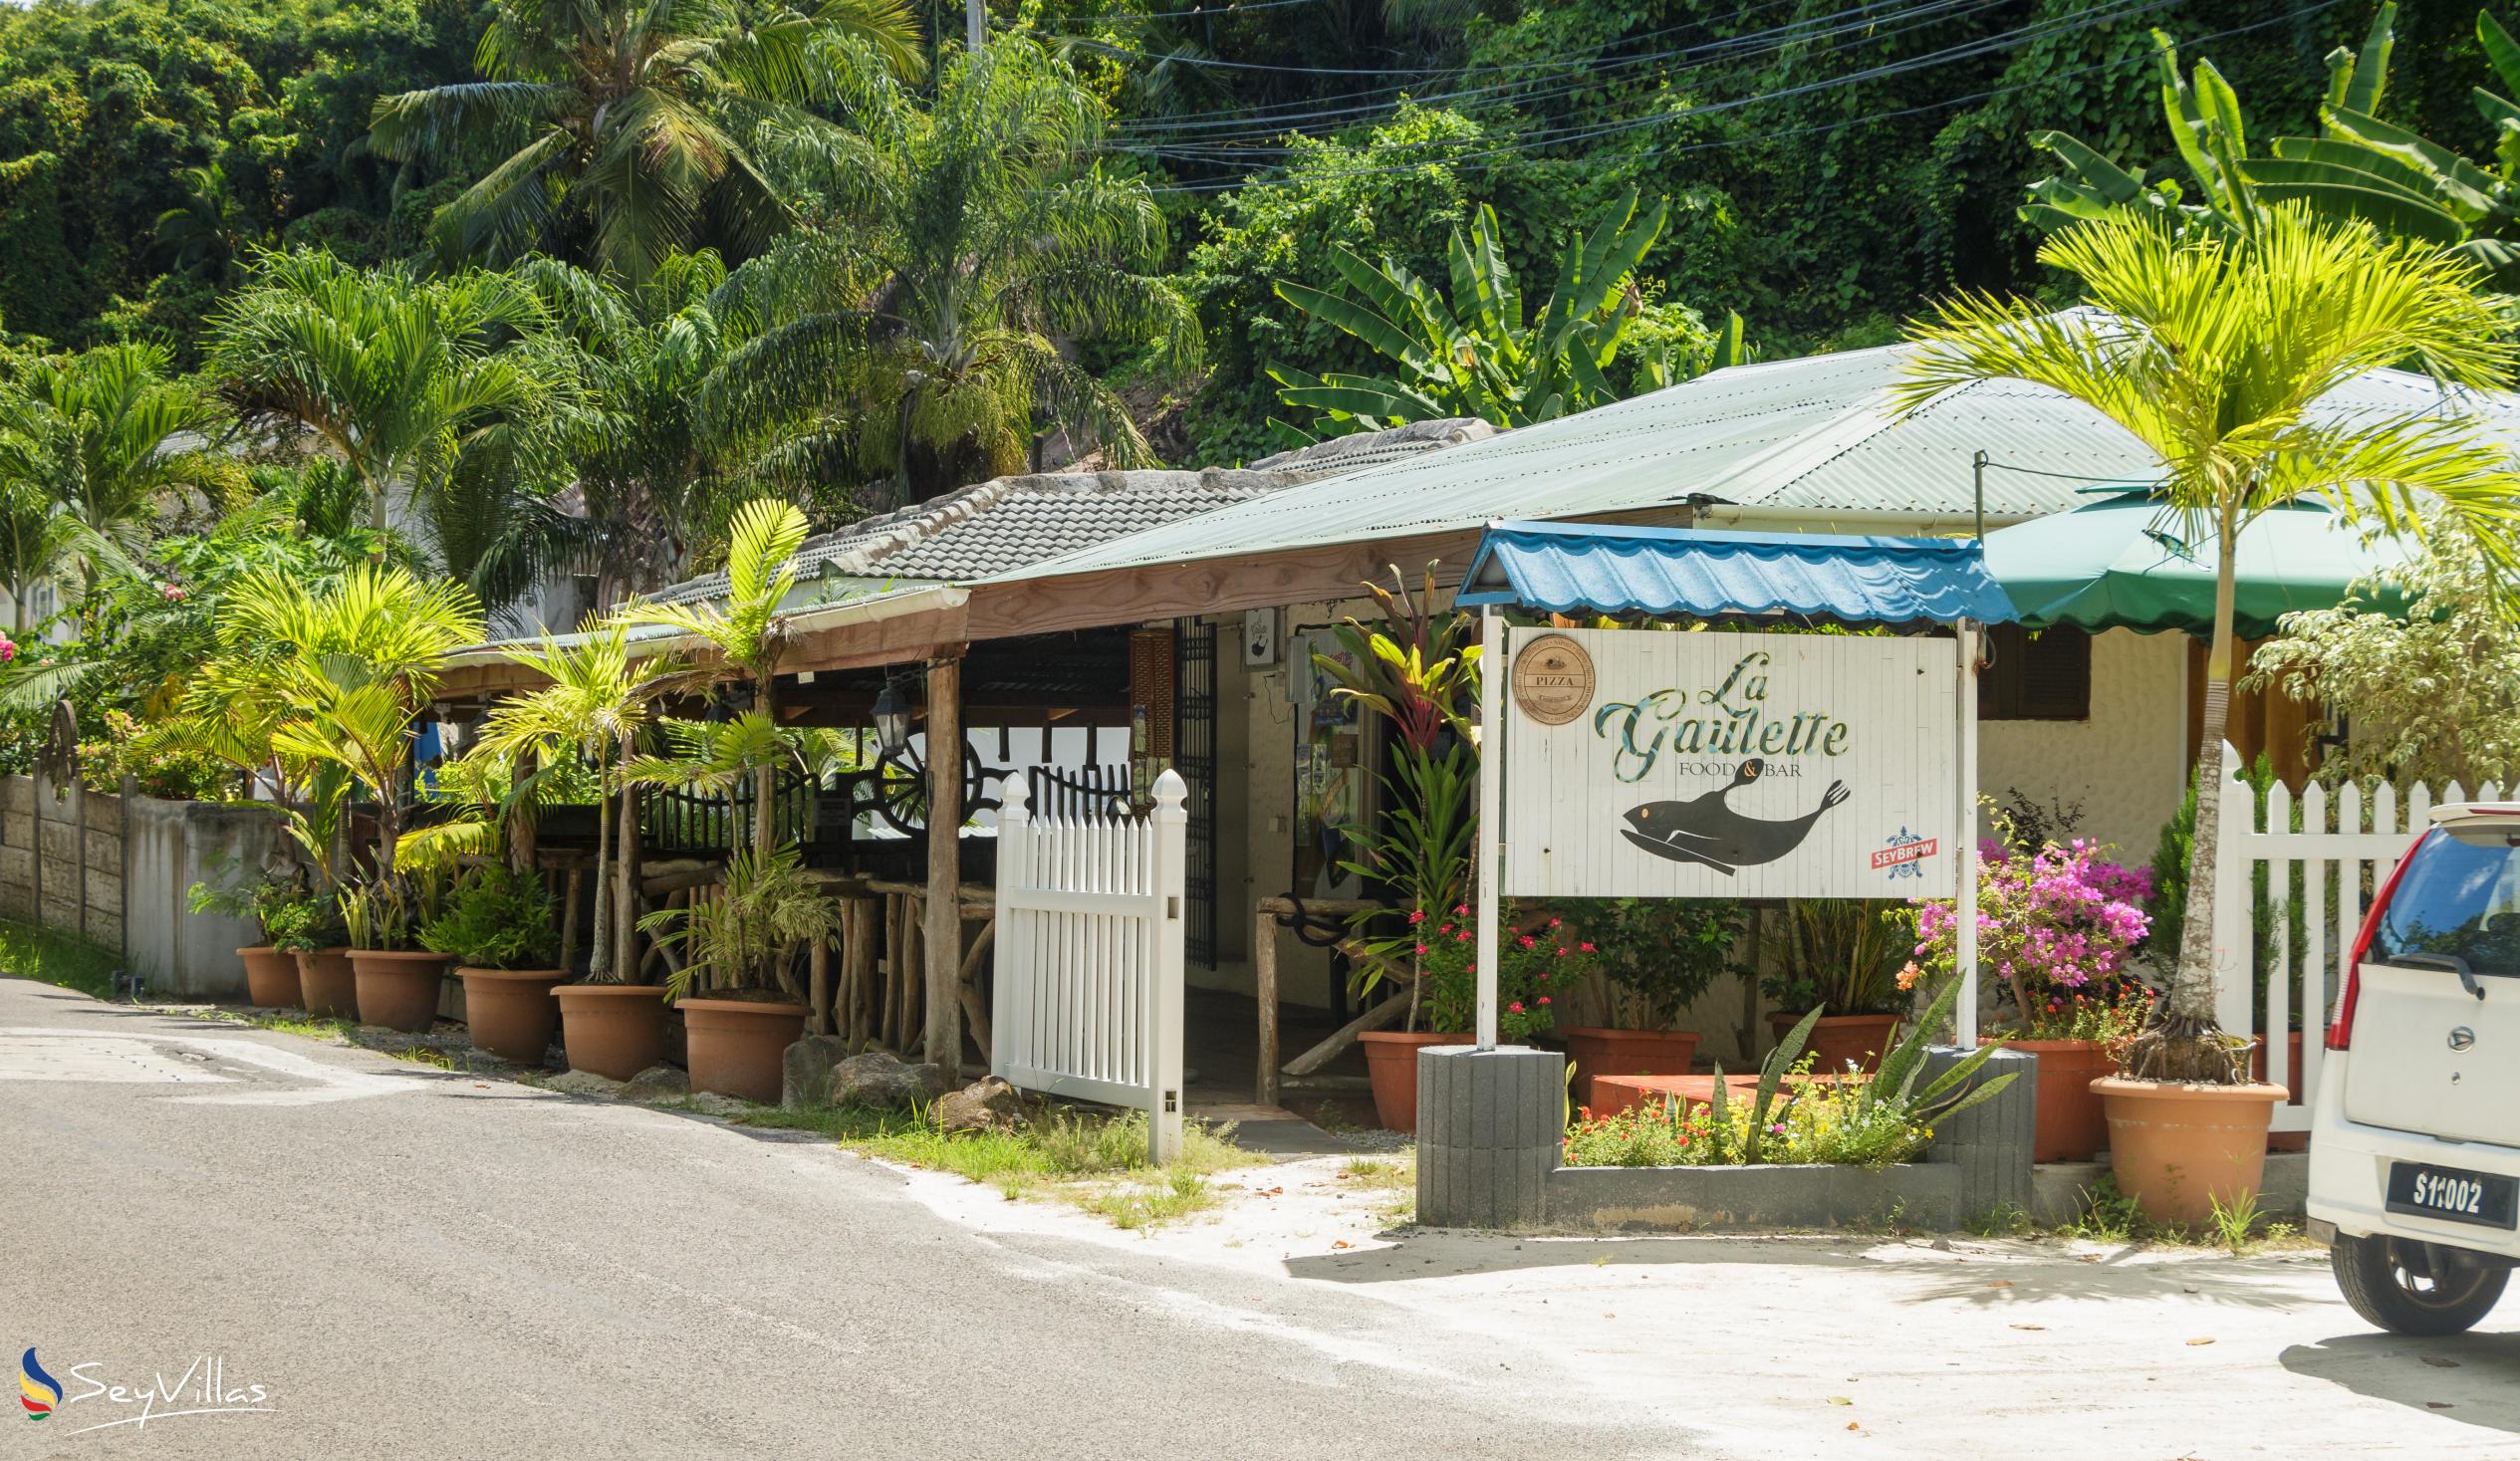 Photo 58: Lazare Picault Hotel - Location - Mahé (Seychelles)